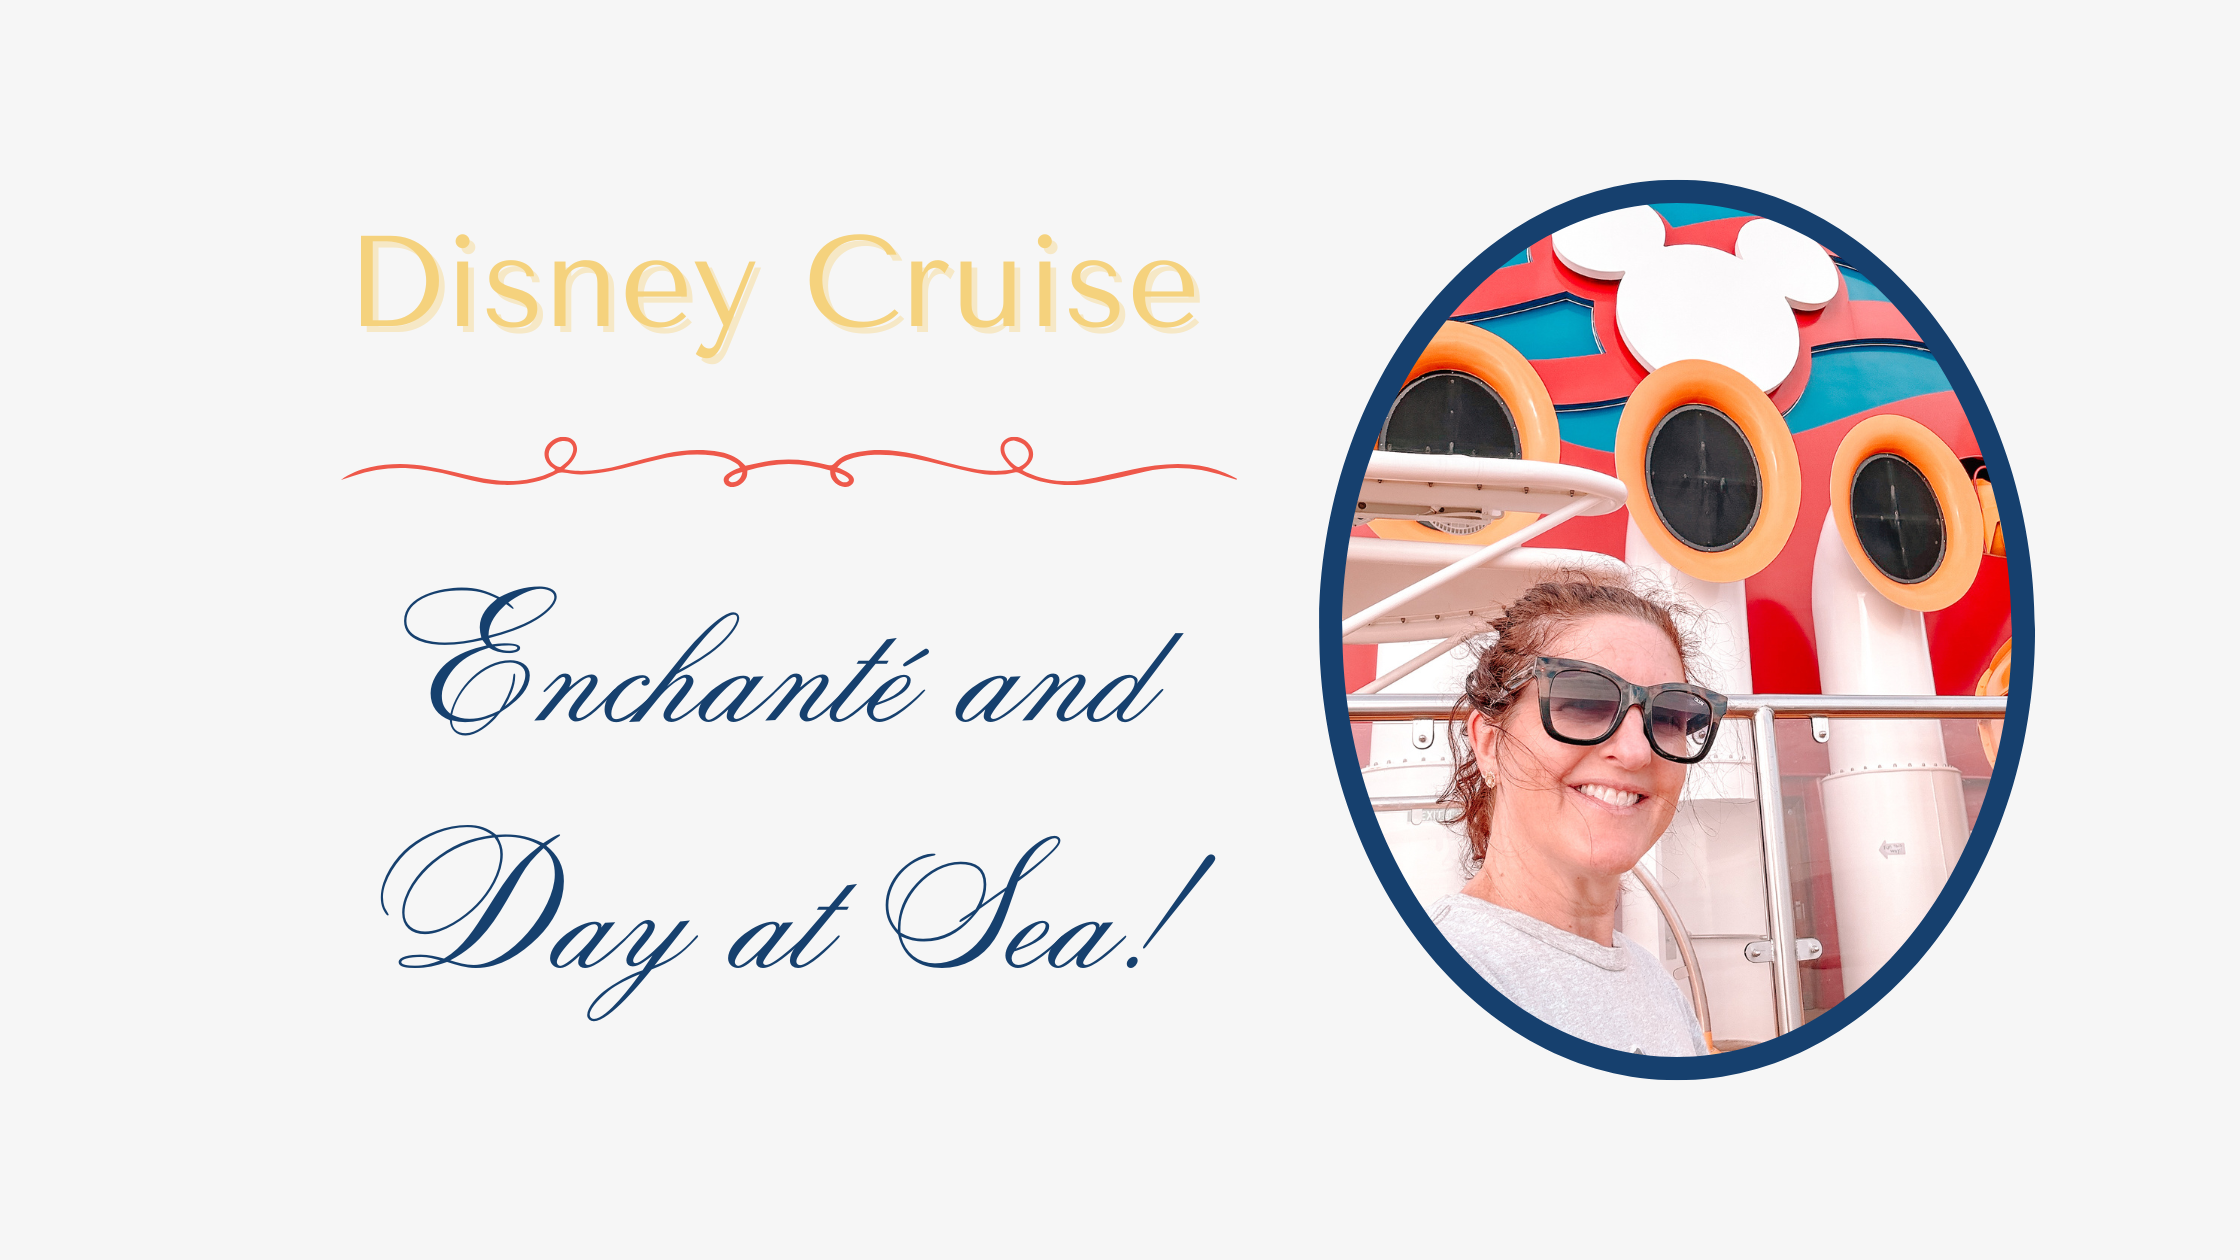 Disney Cruise: Enchanté and Day at Sea!